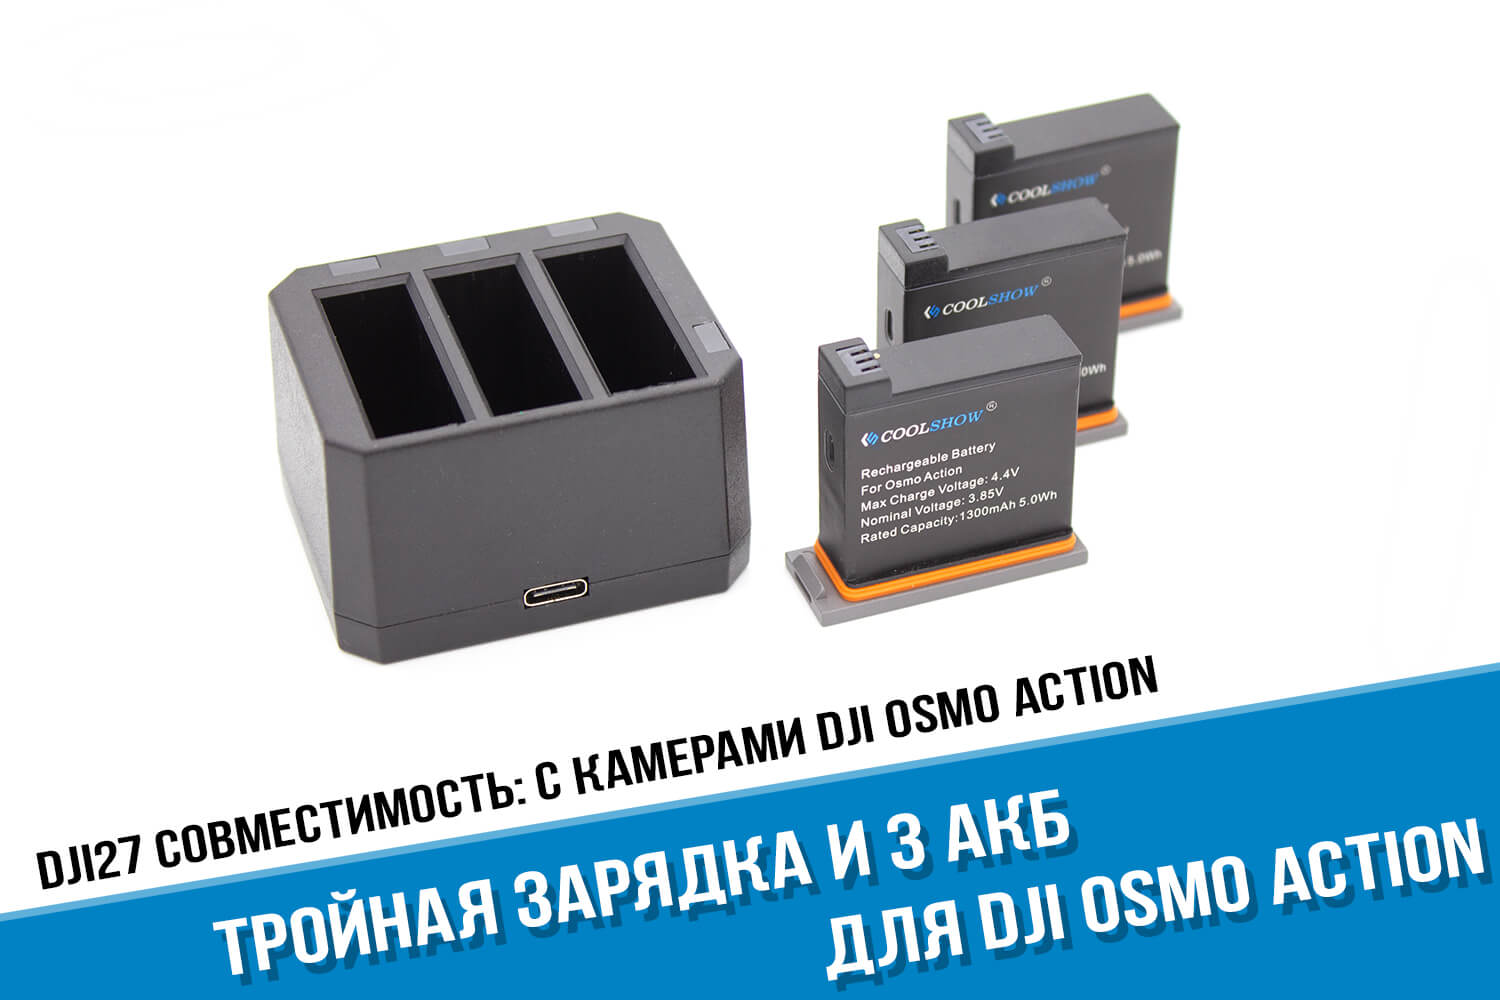 Зарядка и три аккумулятора DJI Osmo Action